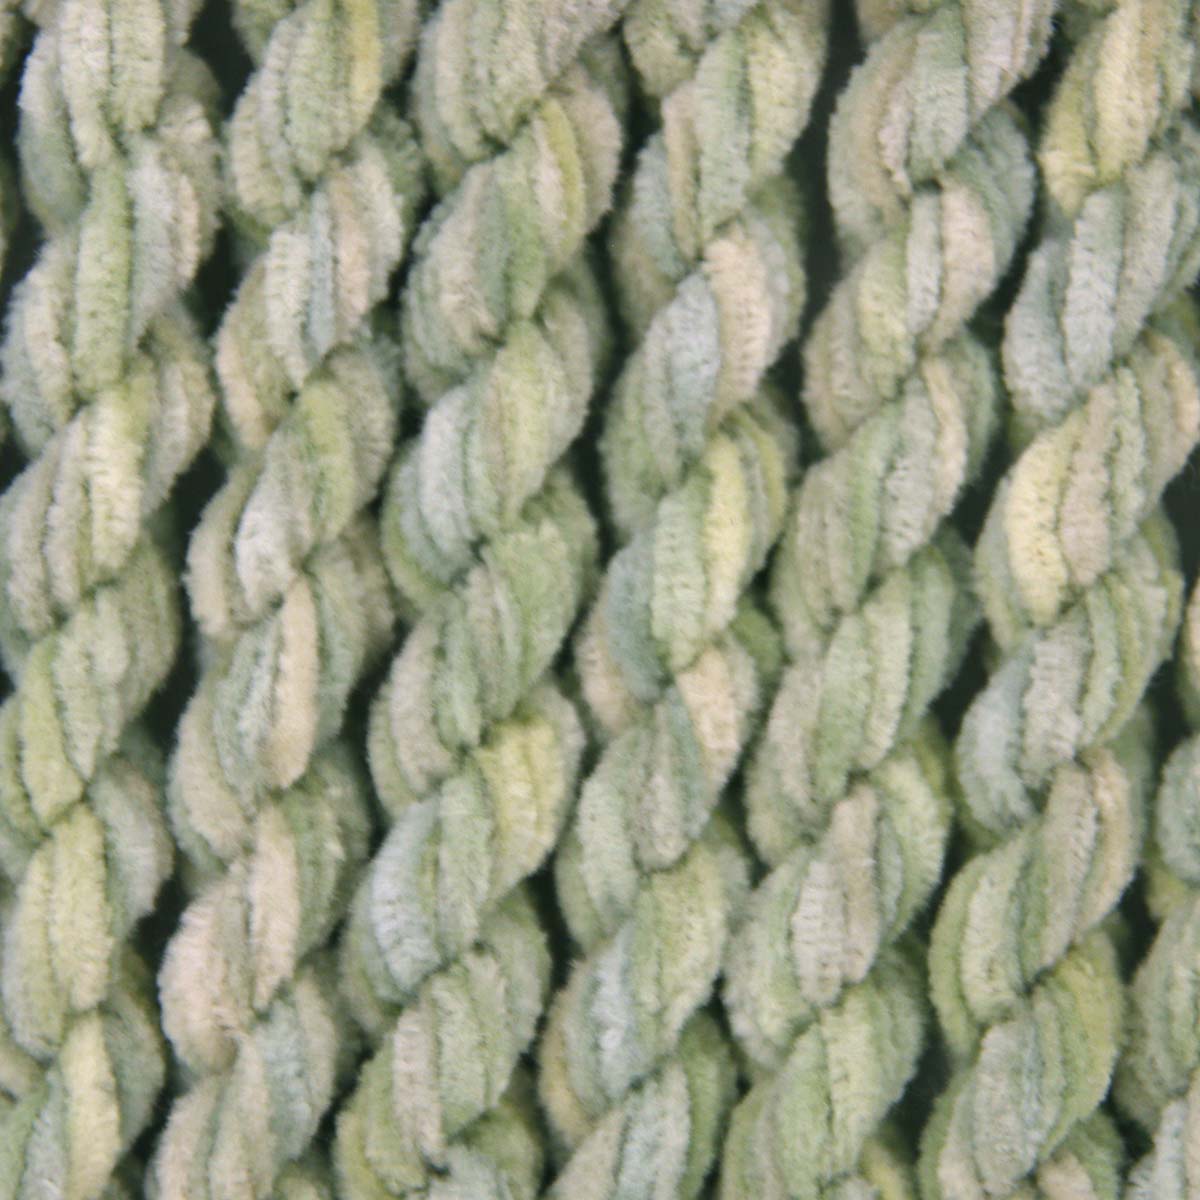 www.colourstreams.com.au Colour Streams Hand Dyed Chenille Threads Slow Stitch Embroidery Textile Arts Fibre DL 36 Salt Bush Greens